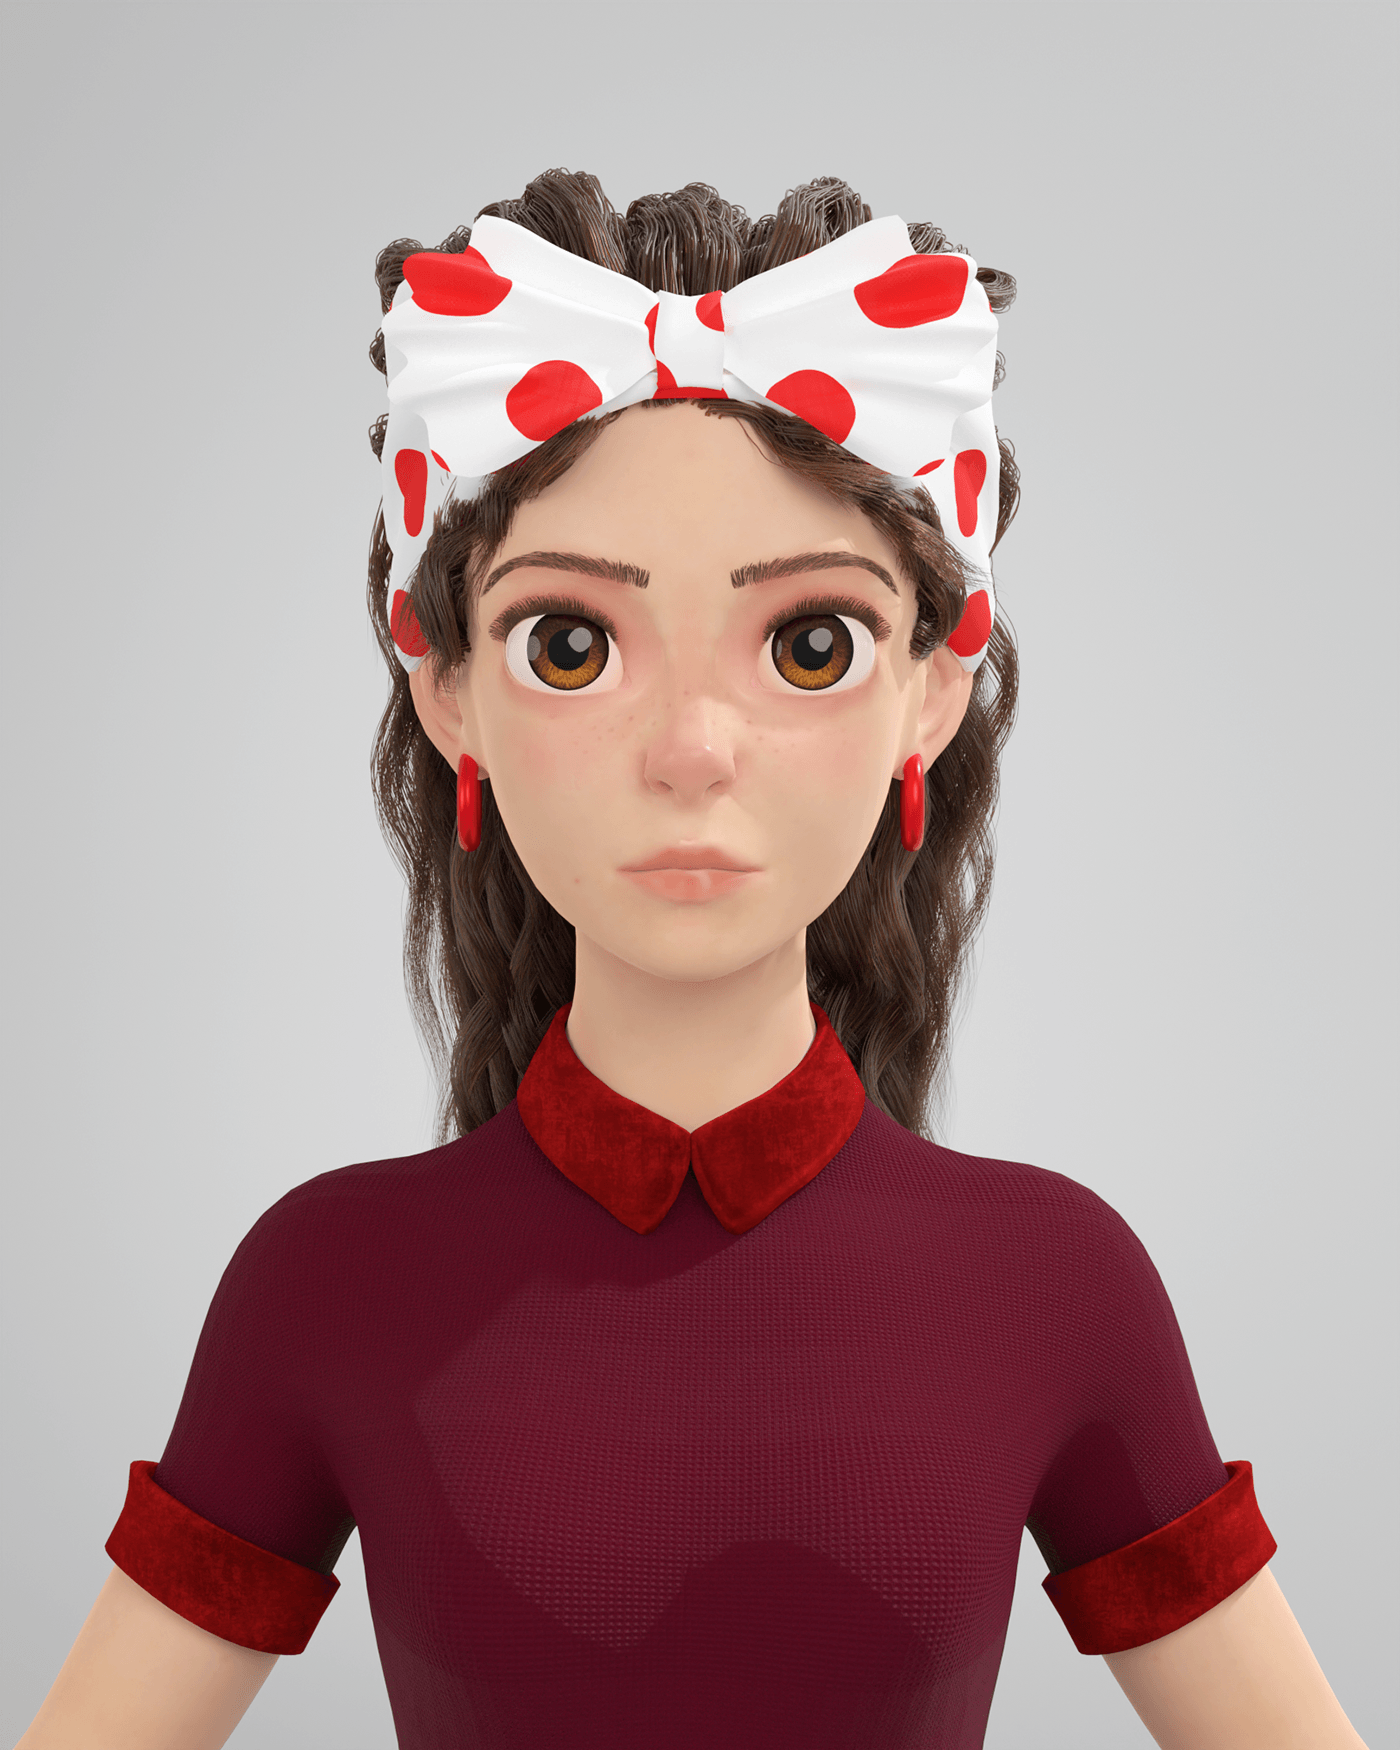 Arepa Harina Pan venezuela caracas 3d modeling blender Character design  Digital Art  3D characterdesign